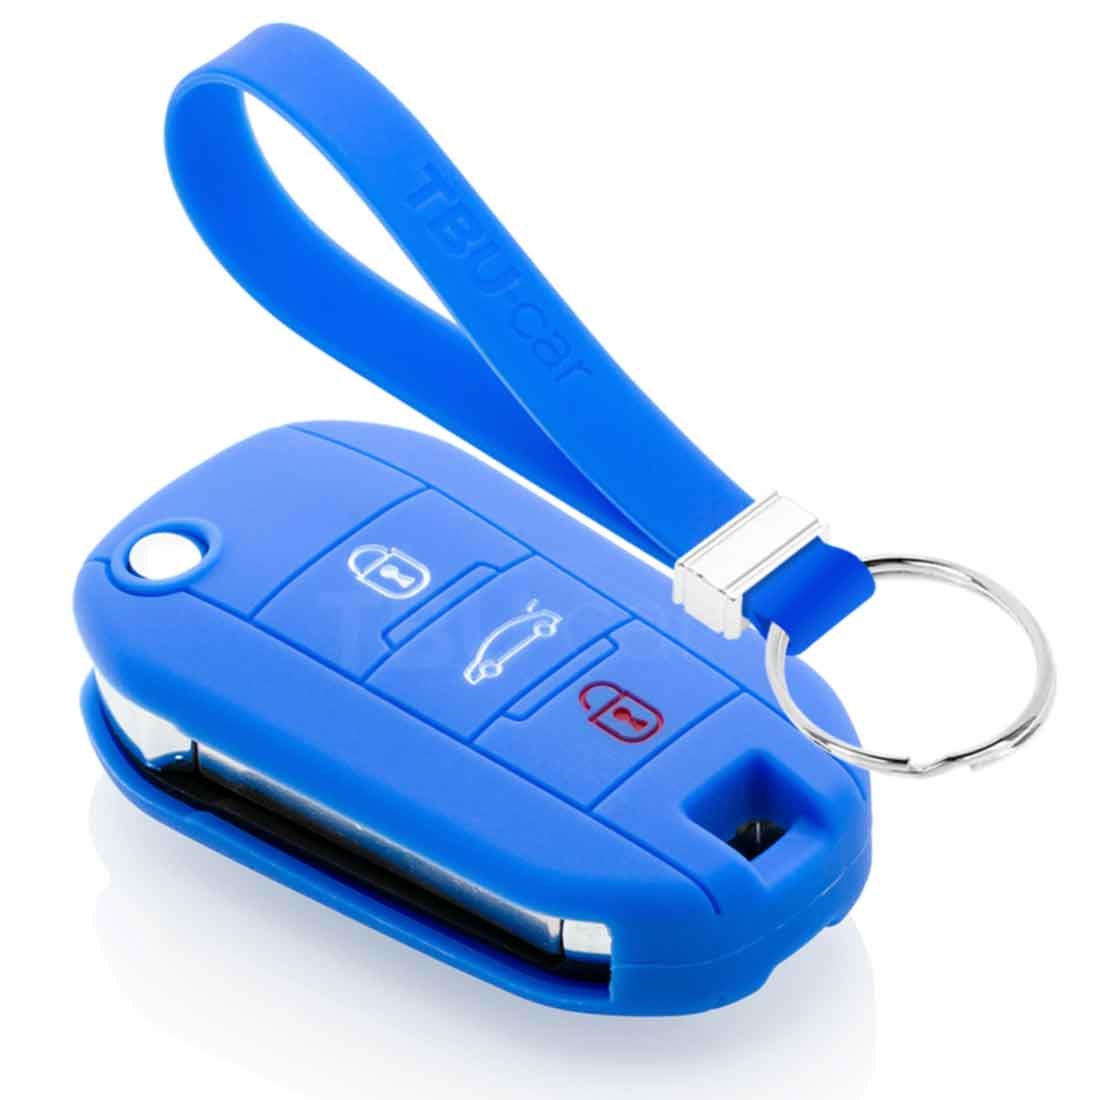 TBU car TBU car Car key cover compatible with Citroën - Silicone Protective Remote Key Shell - FOB Case Cover - Blue